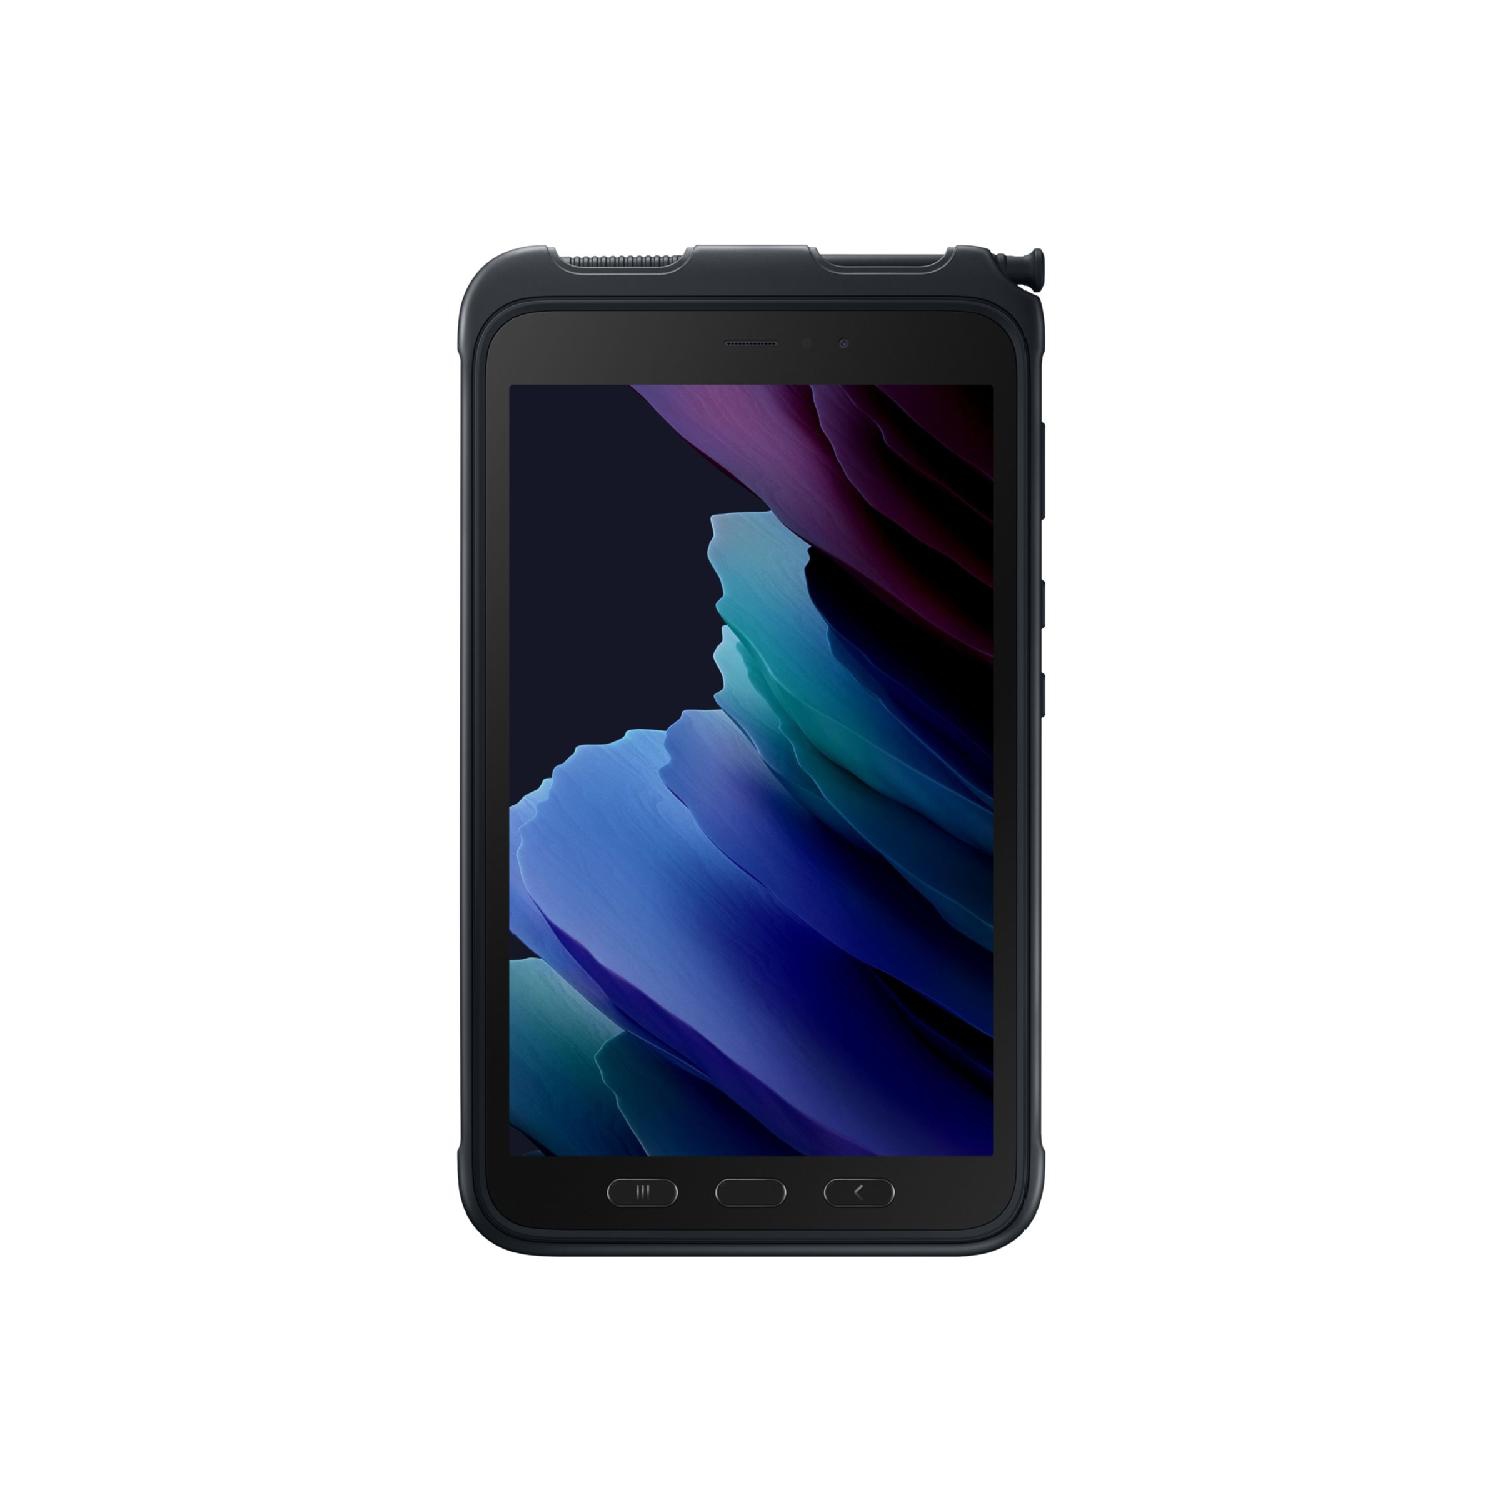 Samsung Galaxy Tab Active3 - 8" 64GB Android Tablet with Octa-Core Processor (4GB Memory/ 64GB Flash Storage)- Black - (SM-T577UZKDXAC)